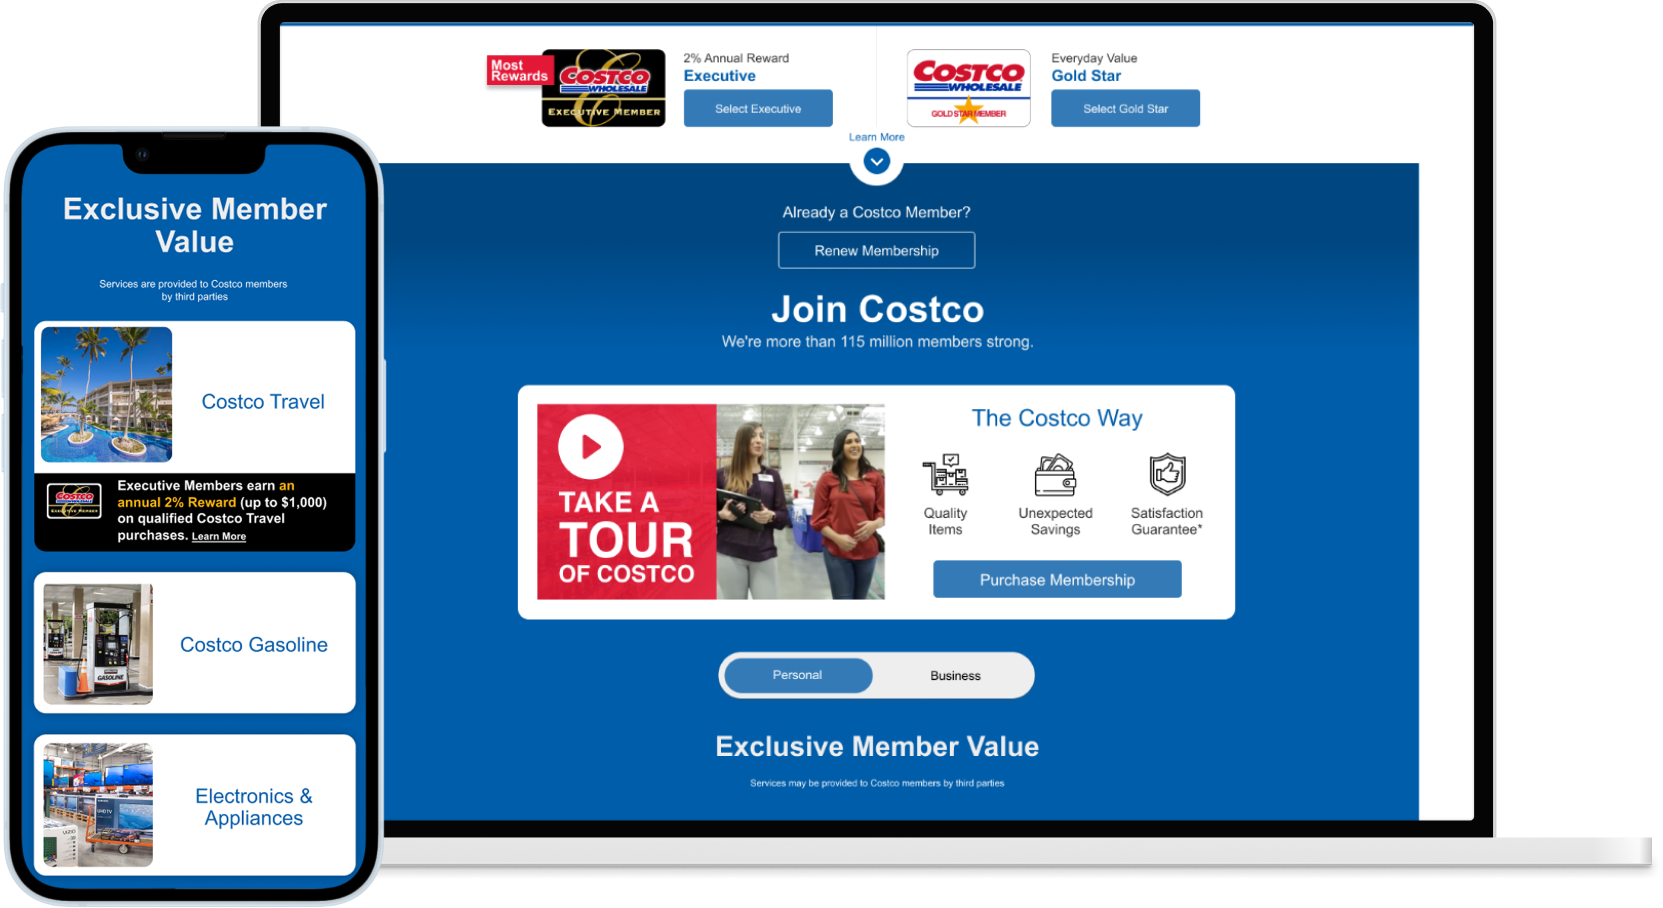 Costco Website and App